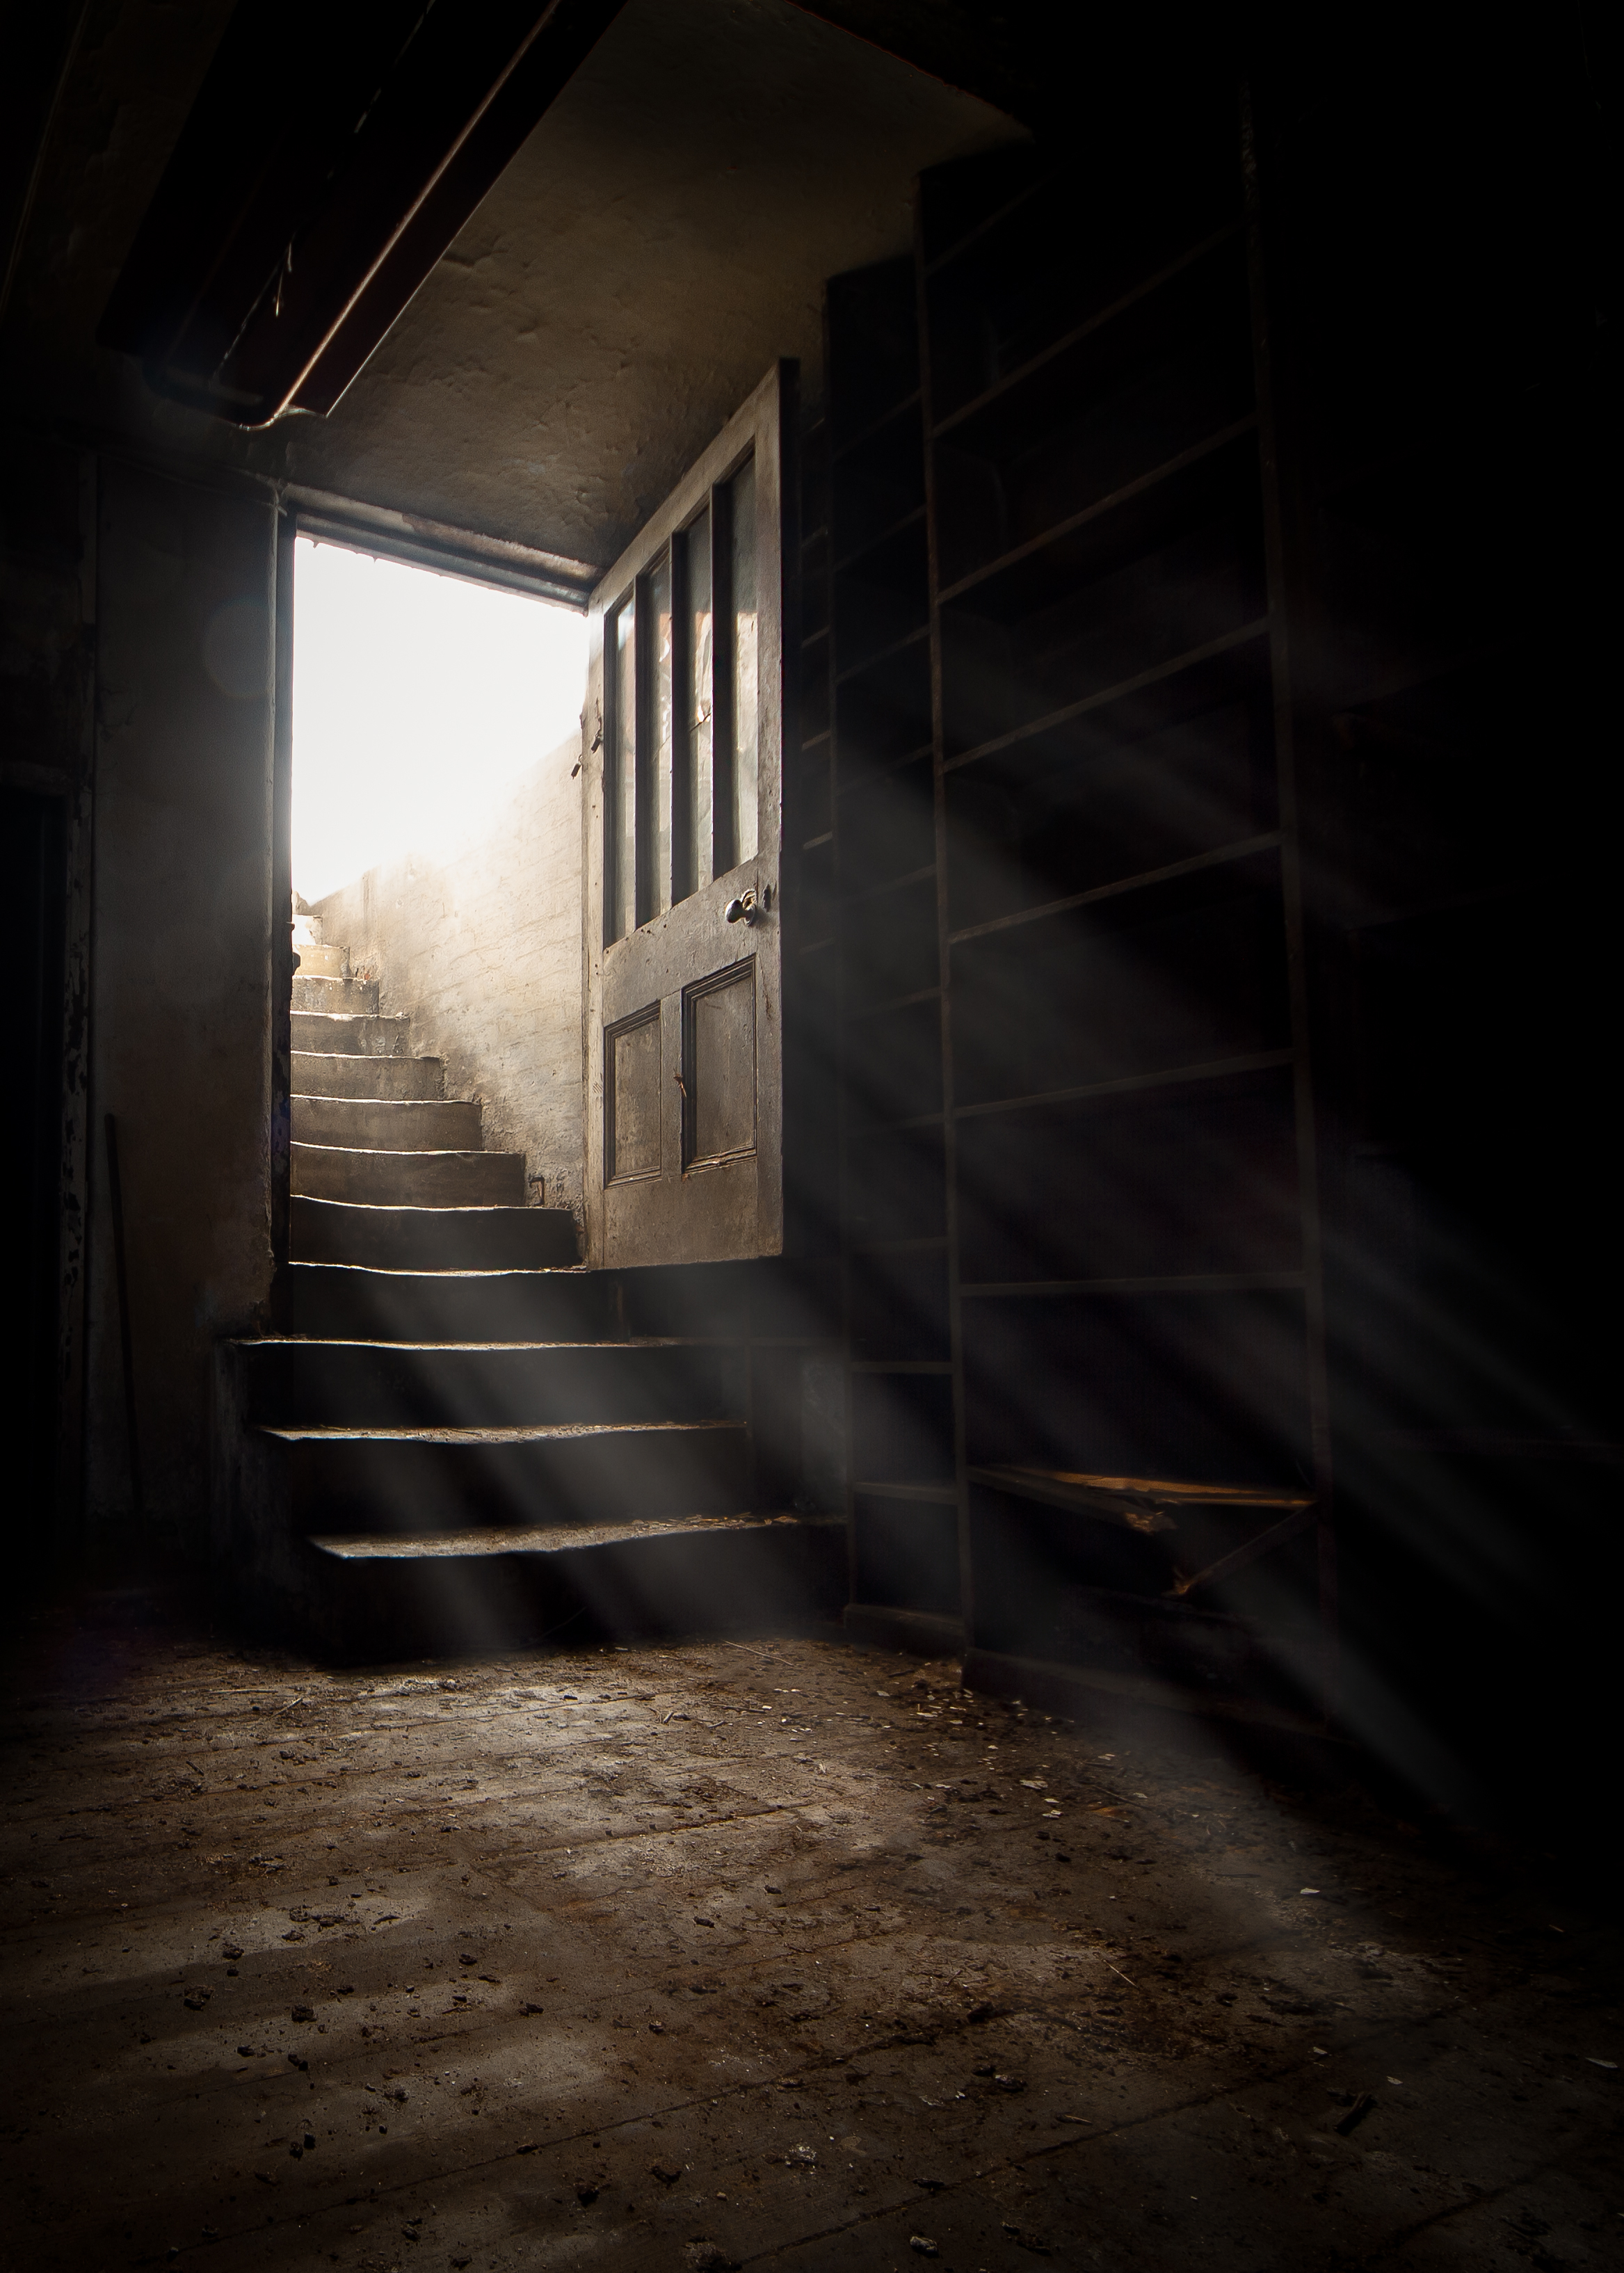 A basement door | Source: Shutterstock